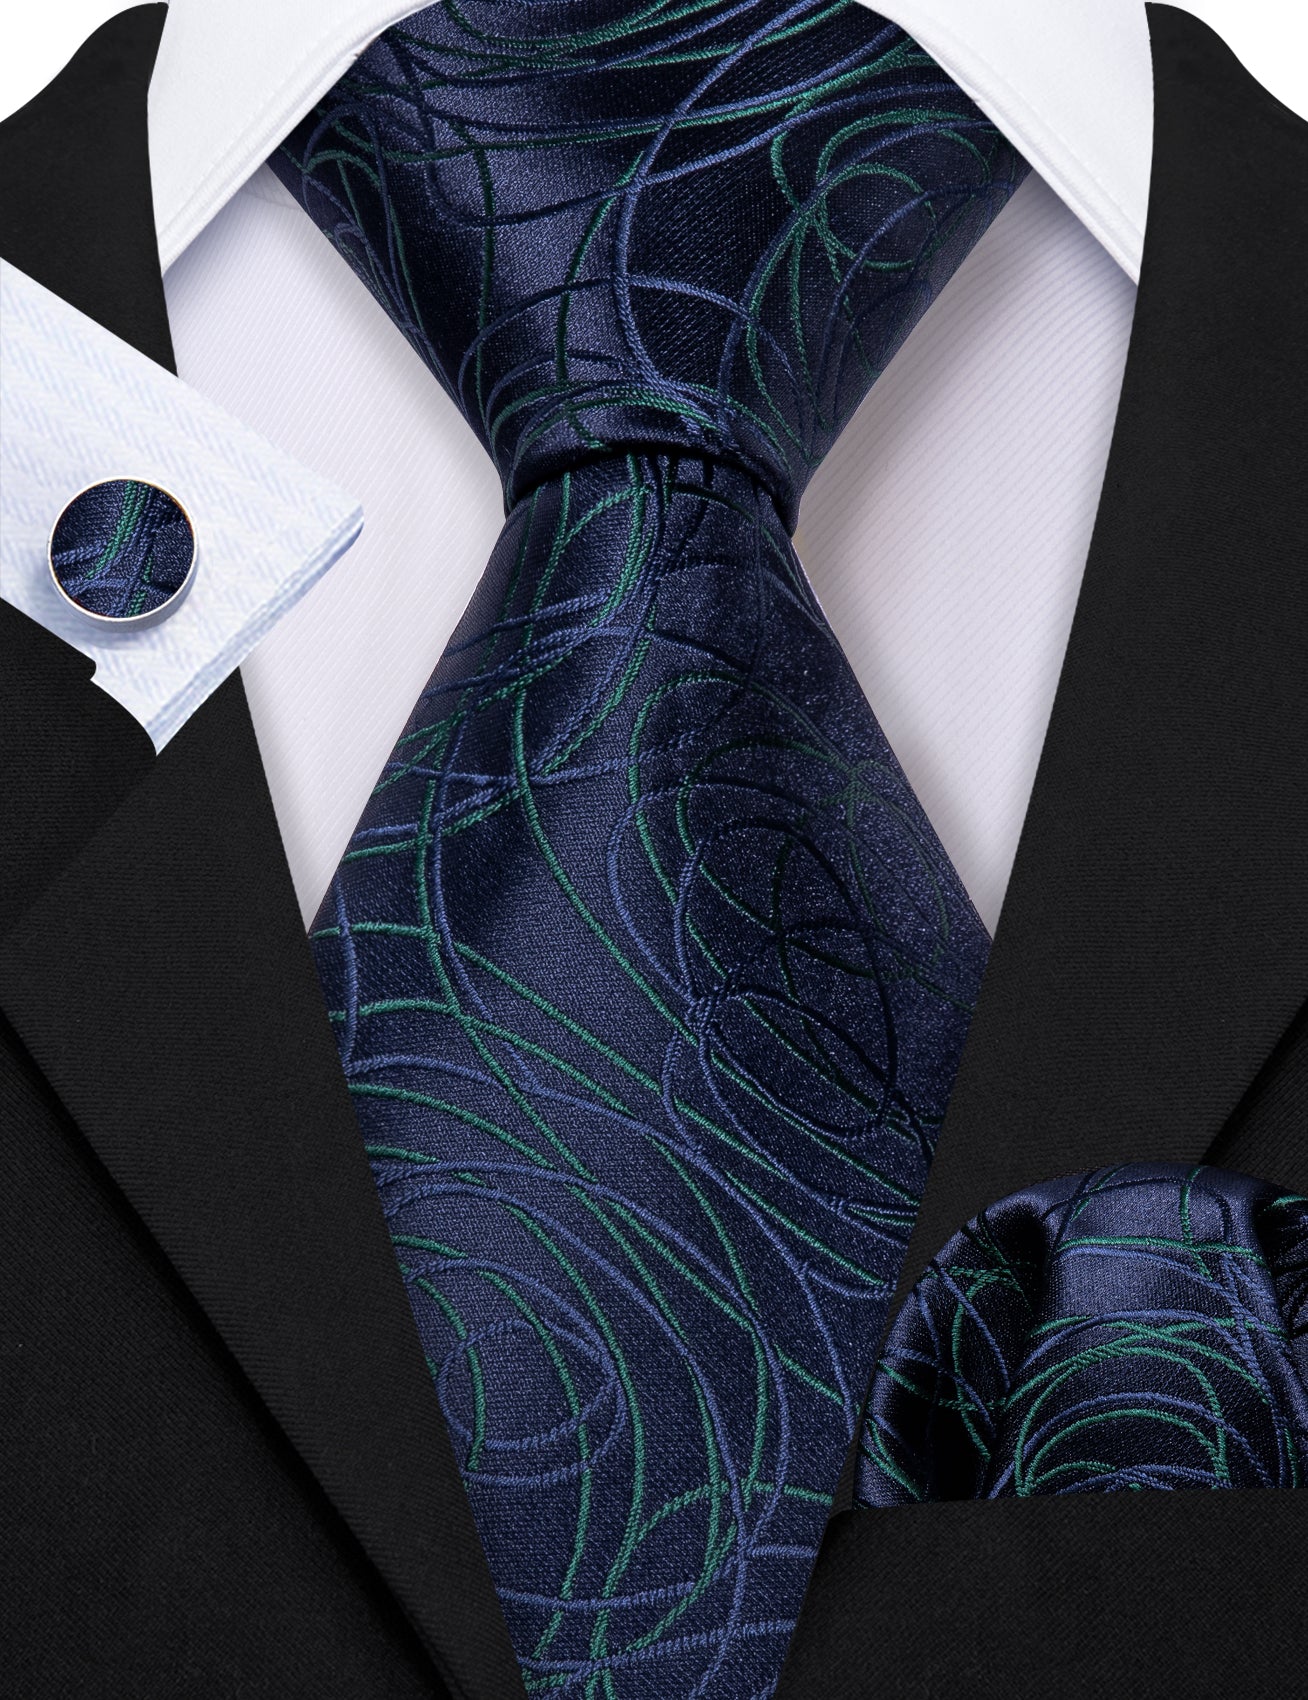 Blue Green Line image Silk Tie Handkerchief Cufflinks Set